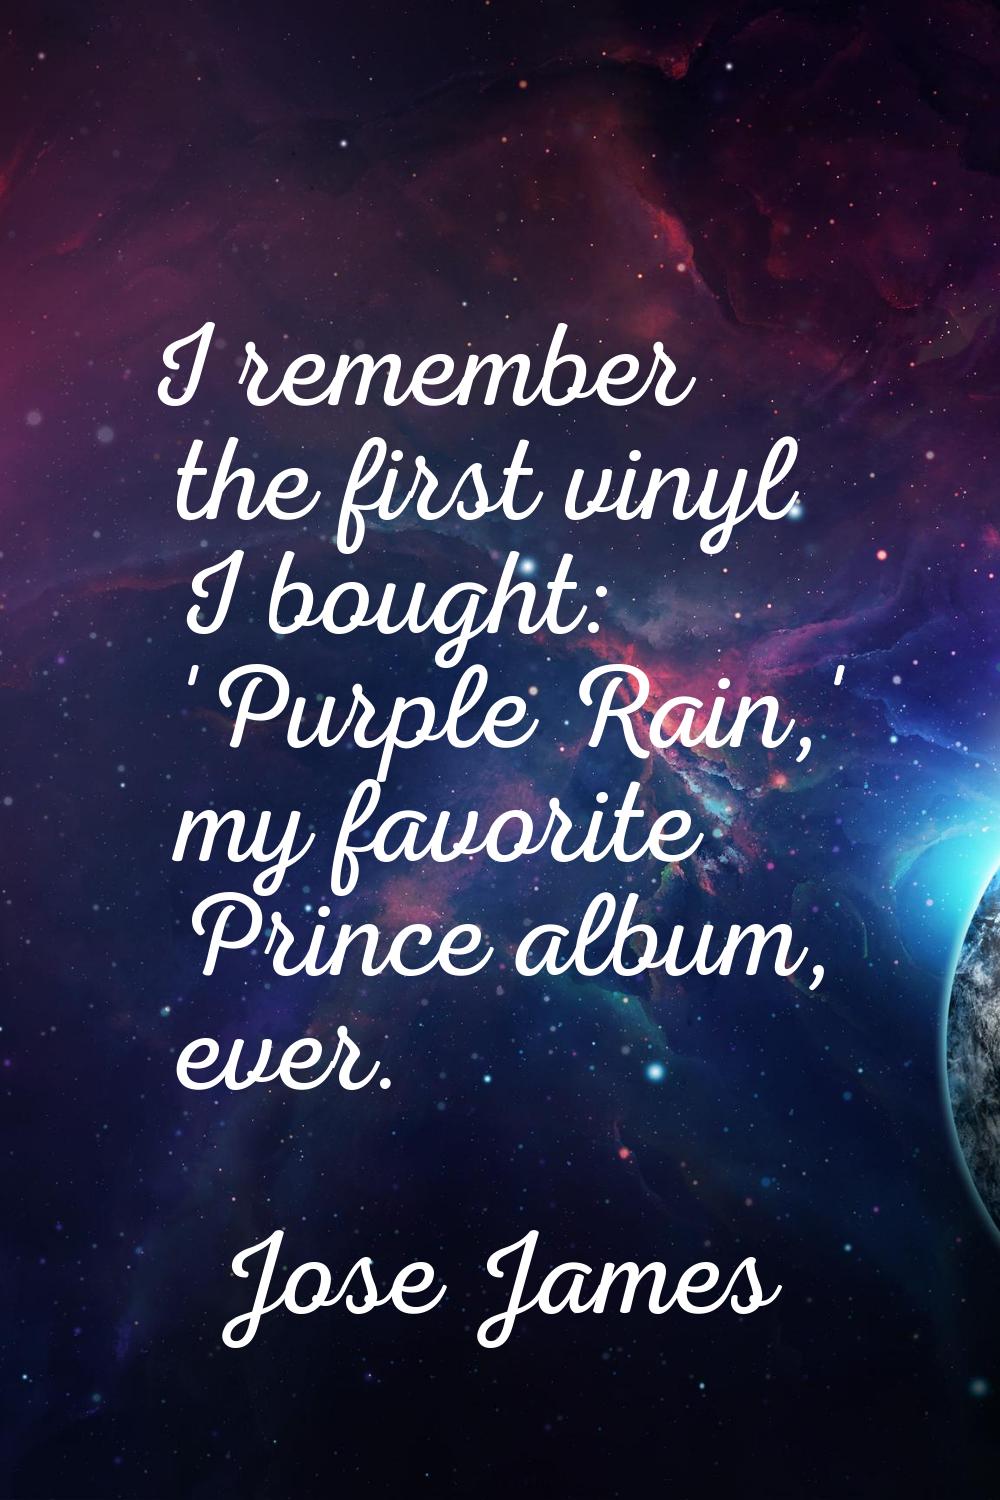 I remember the first vinyl I bought: 'Purple Rain,' my favorite Prince album, ever.